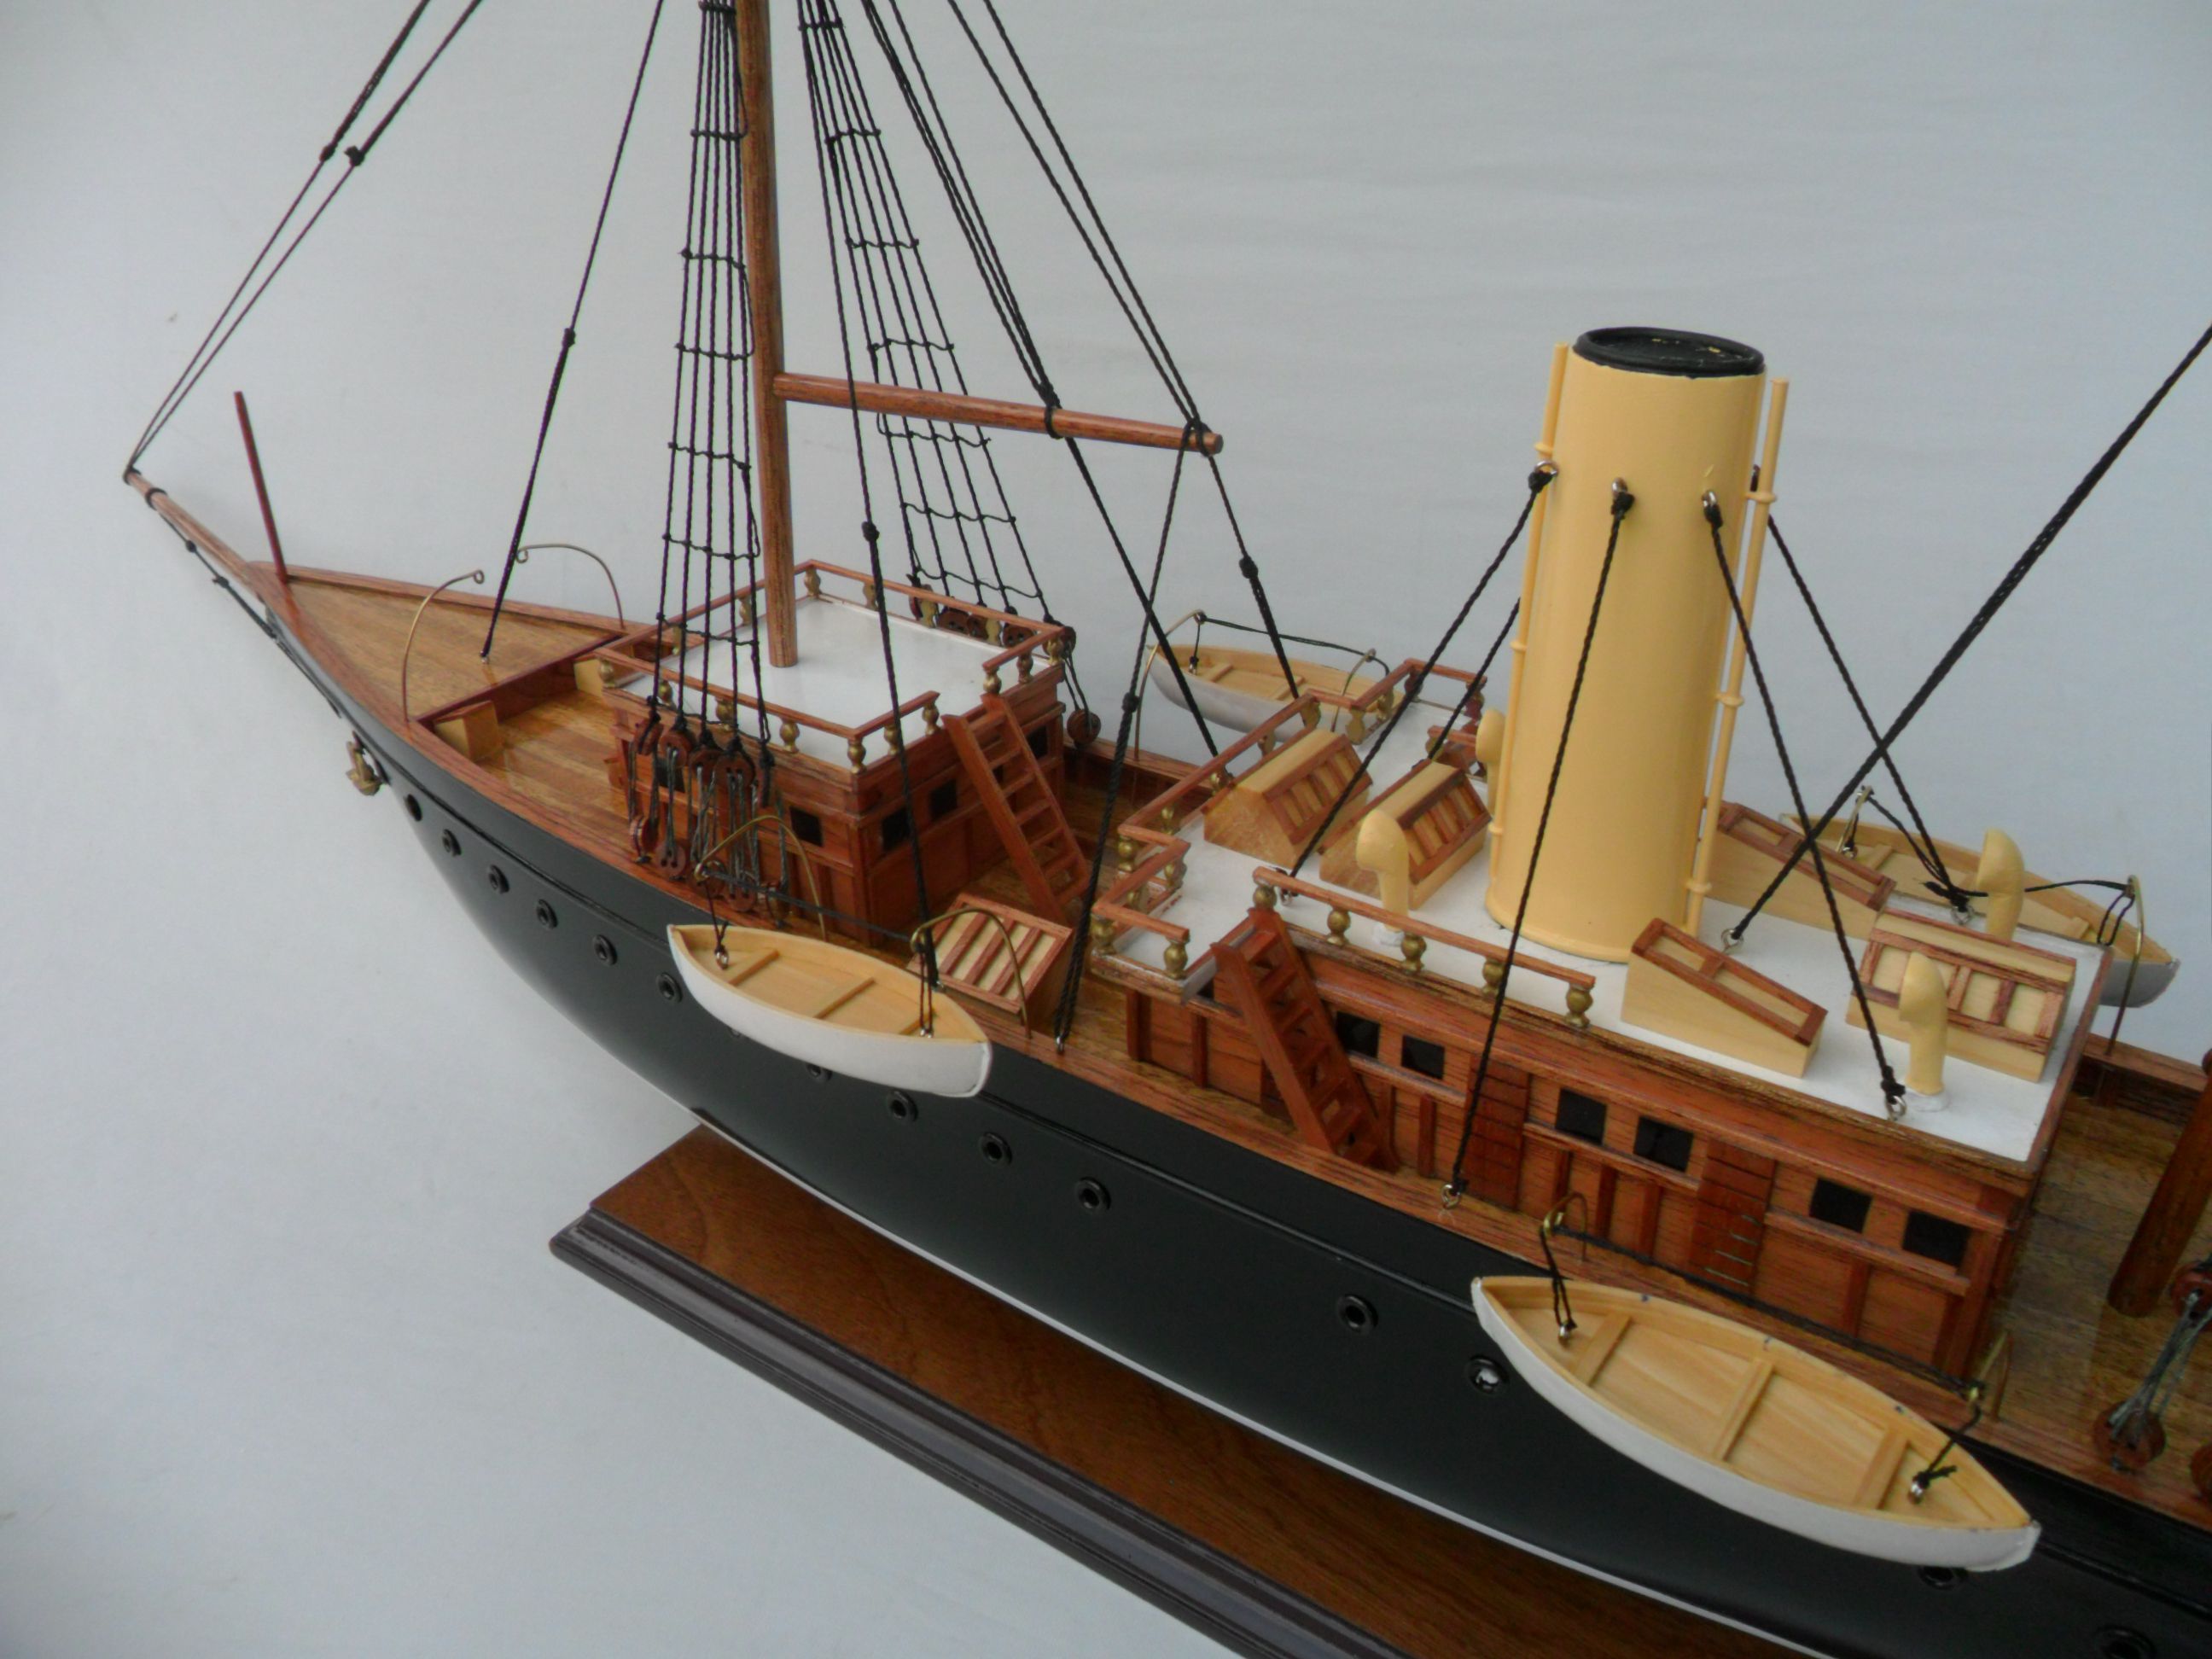 Corsair II Wooden Model Ship - GN